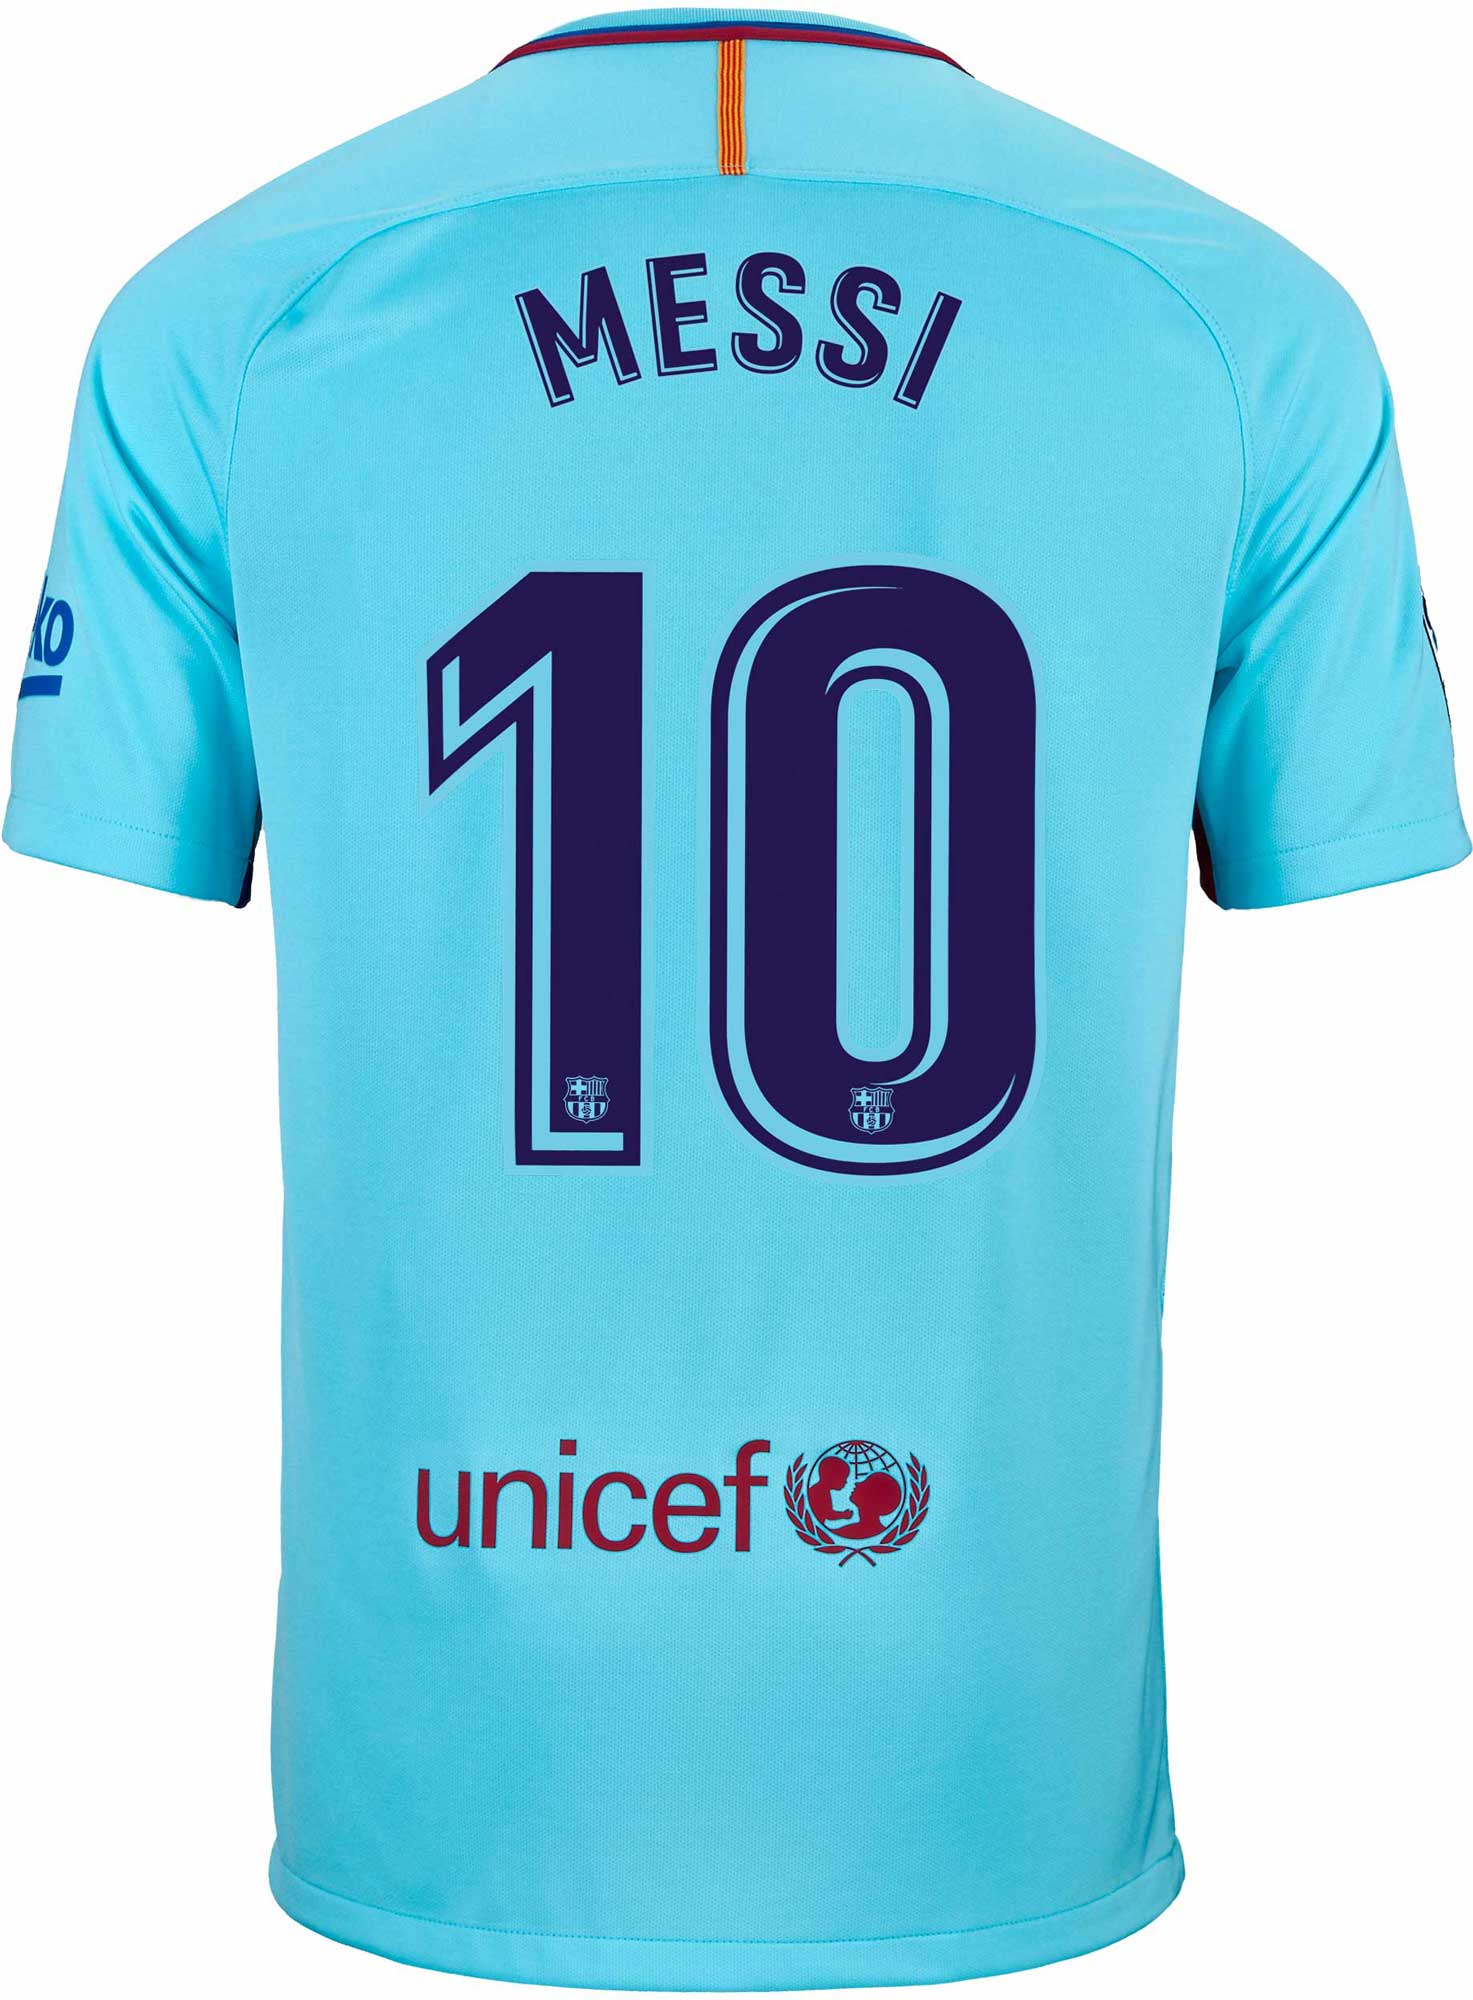 Nike Kids Lionel Messi Barcelona Away Jersey 201718